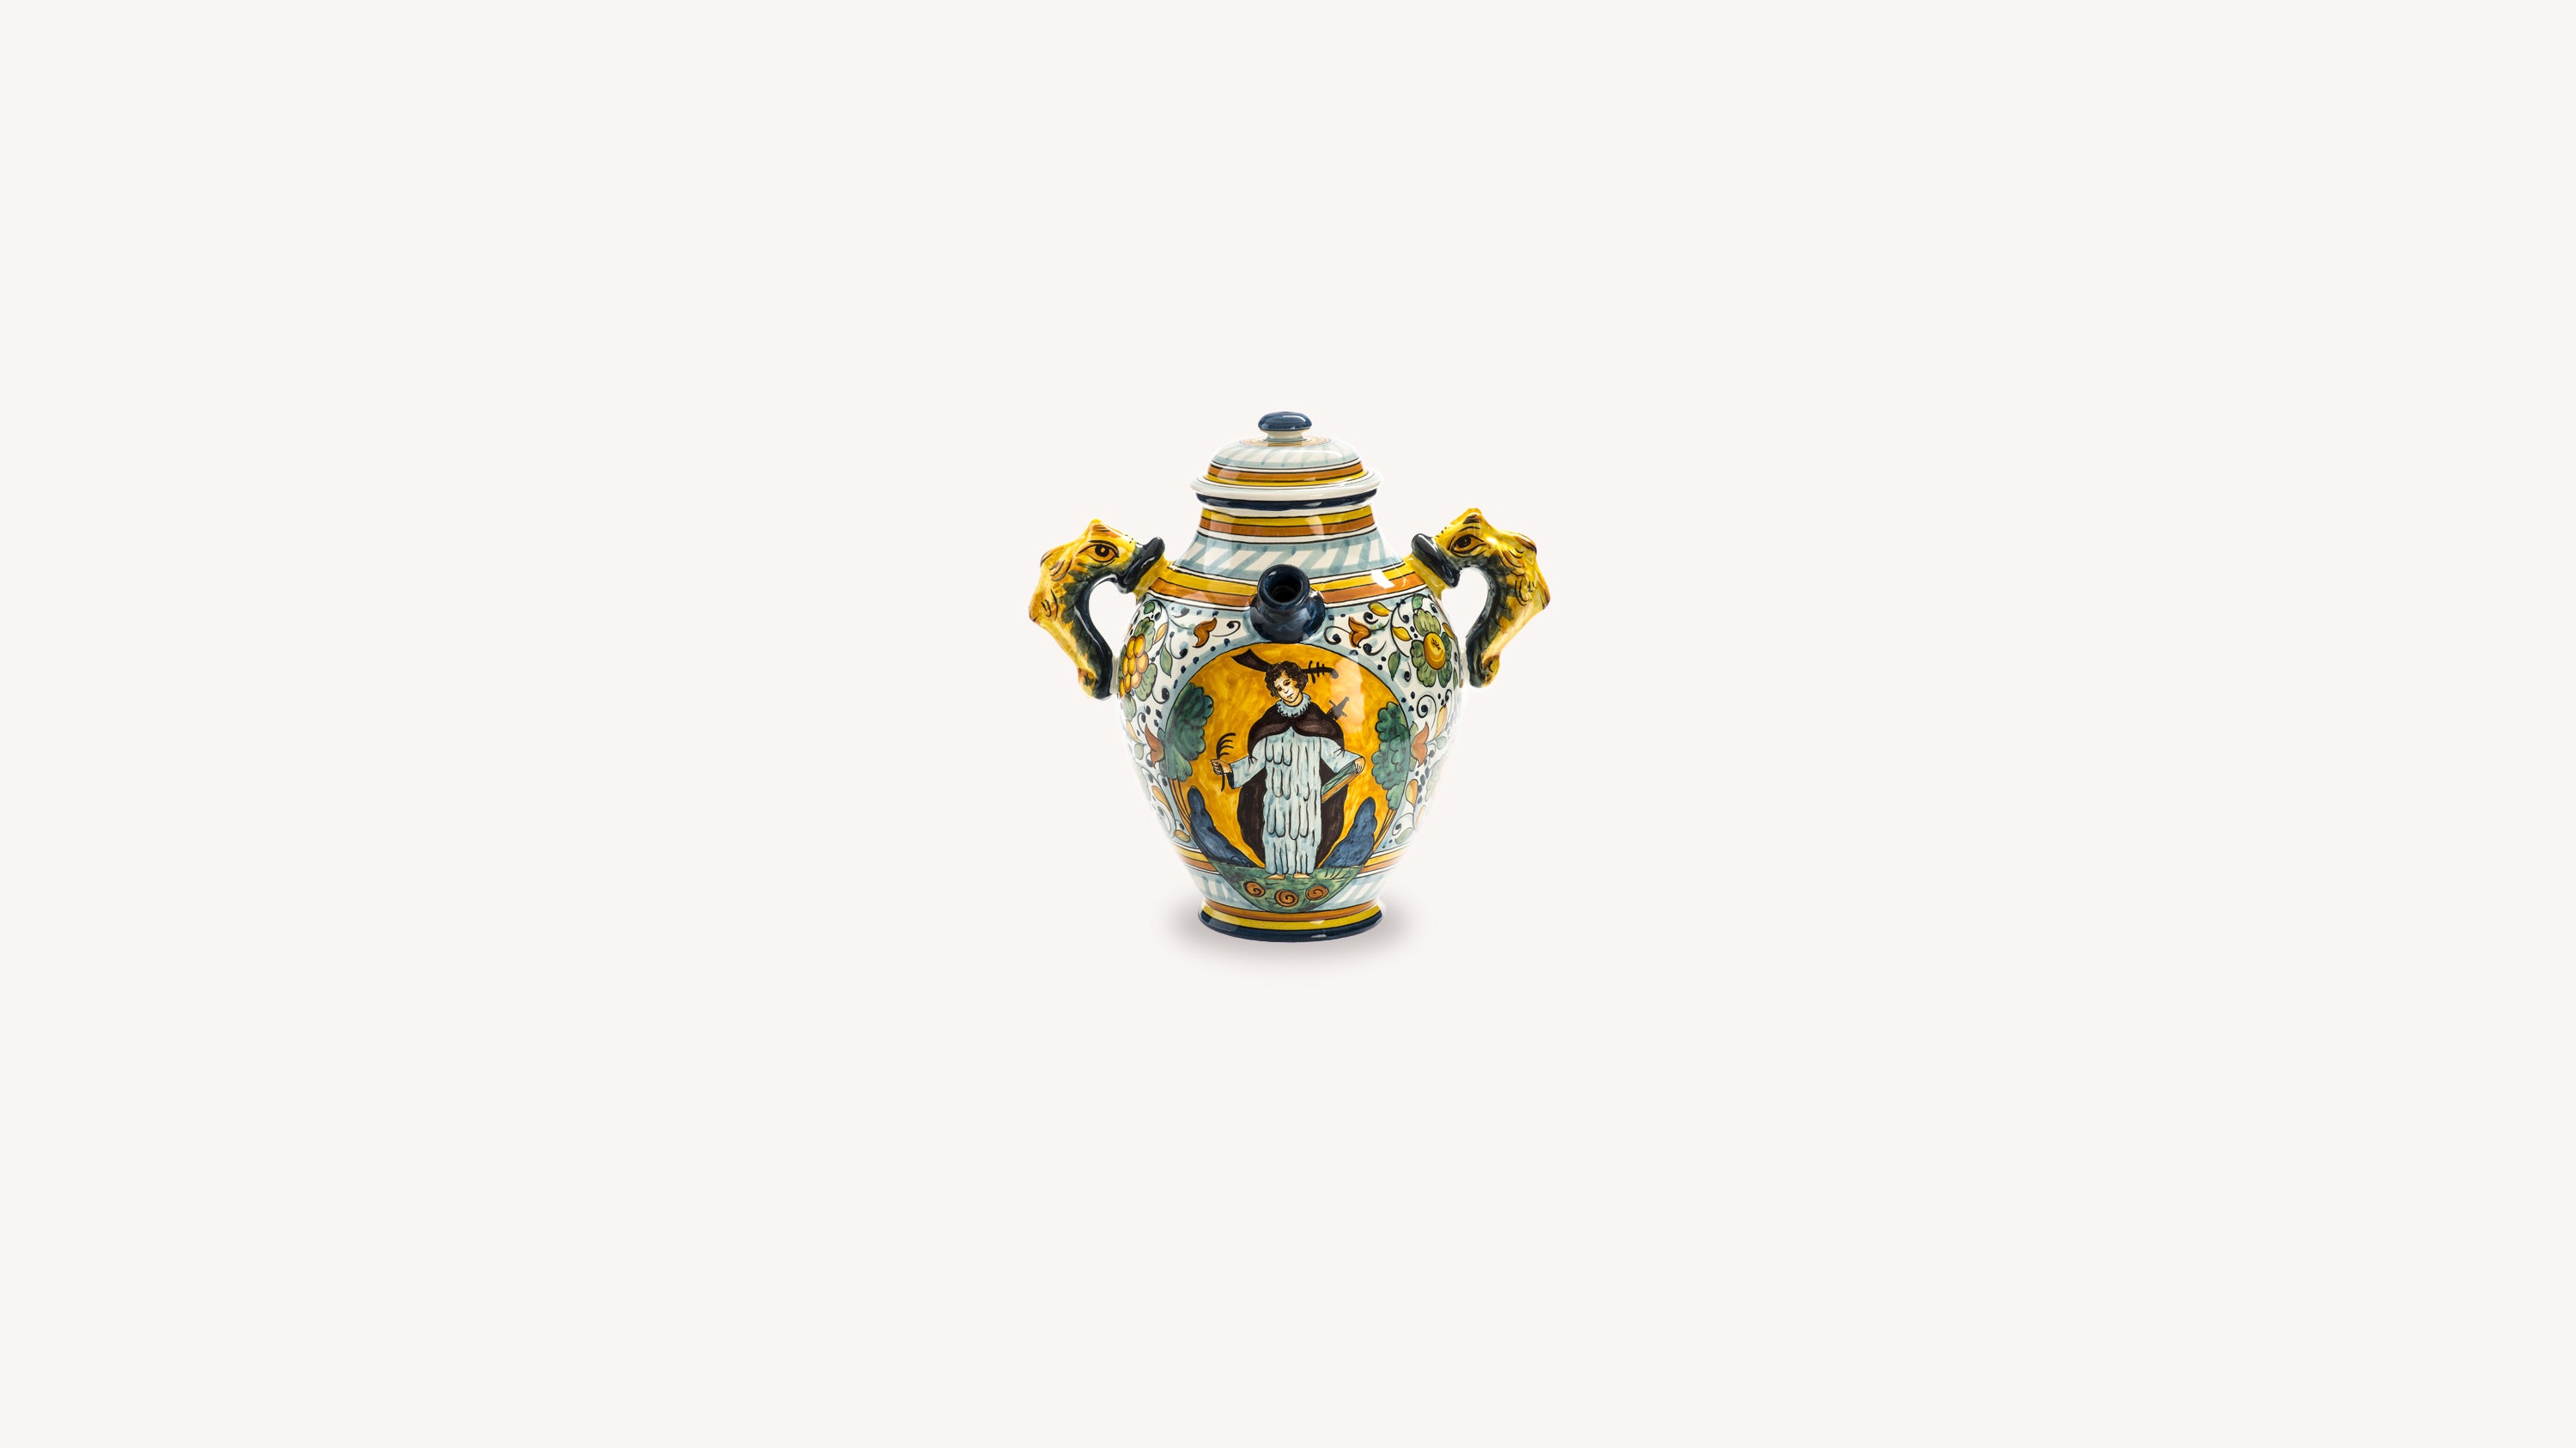 Ceramic Vase With St. Peter The Martyr Decoration Accessories officina-smn-usa-ca.myshopify.com Officina Profumo Farmaceutica di Santa Maria Novella - US